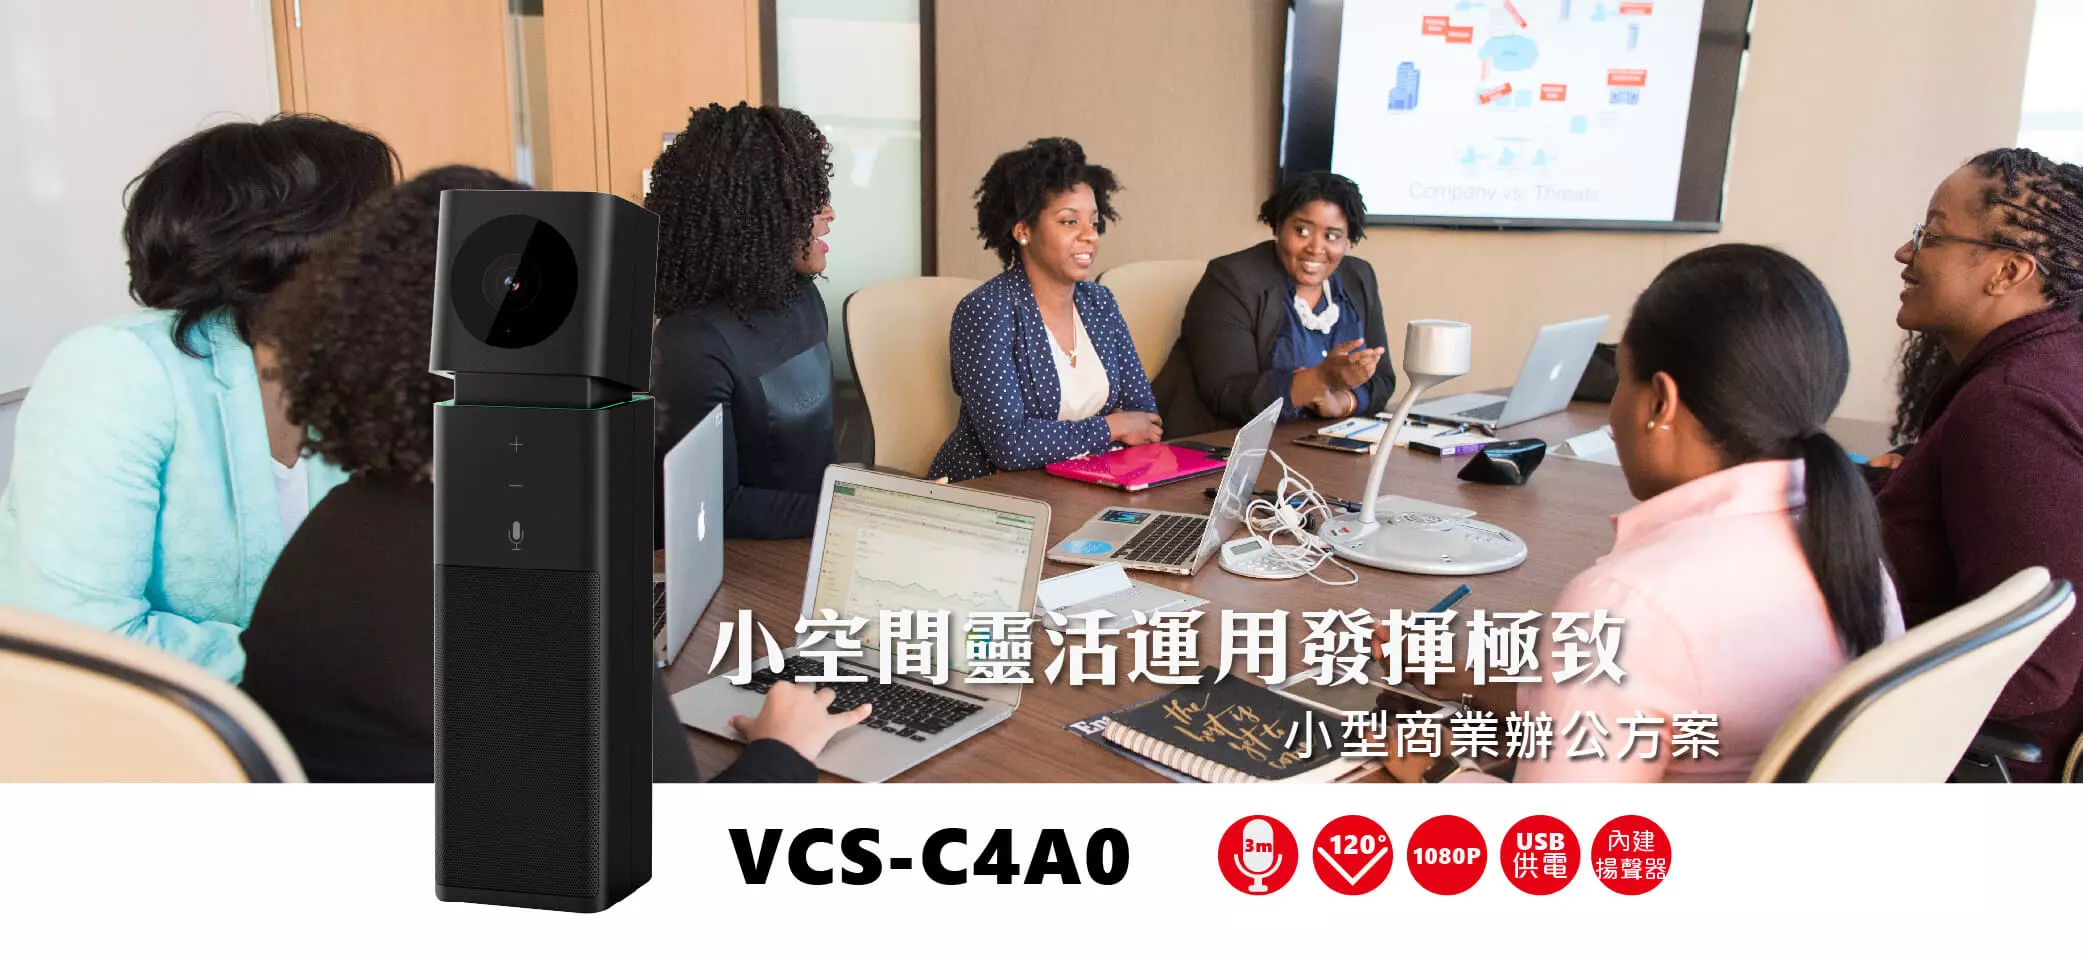 VCS-C4A0視訊會議